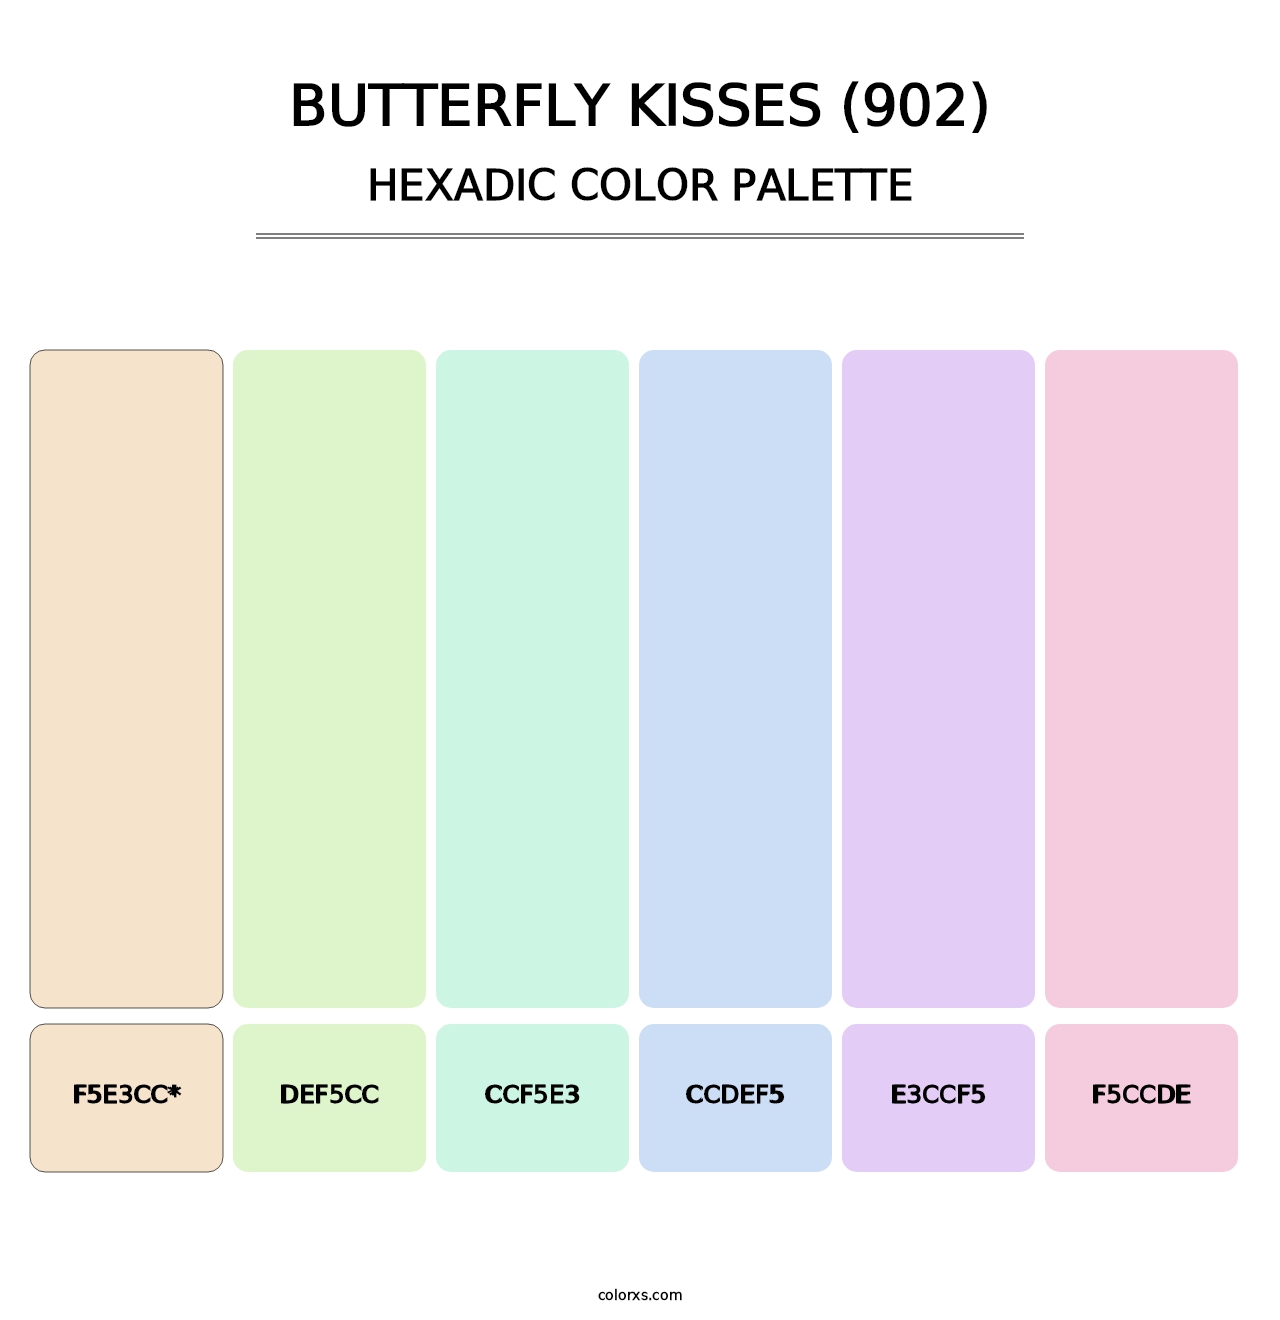 Butterfly Kisses (902) - Hexadic Color Palette